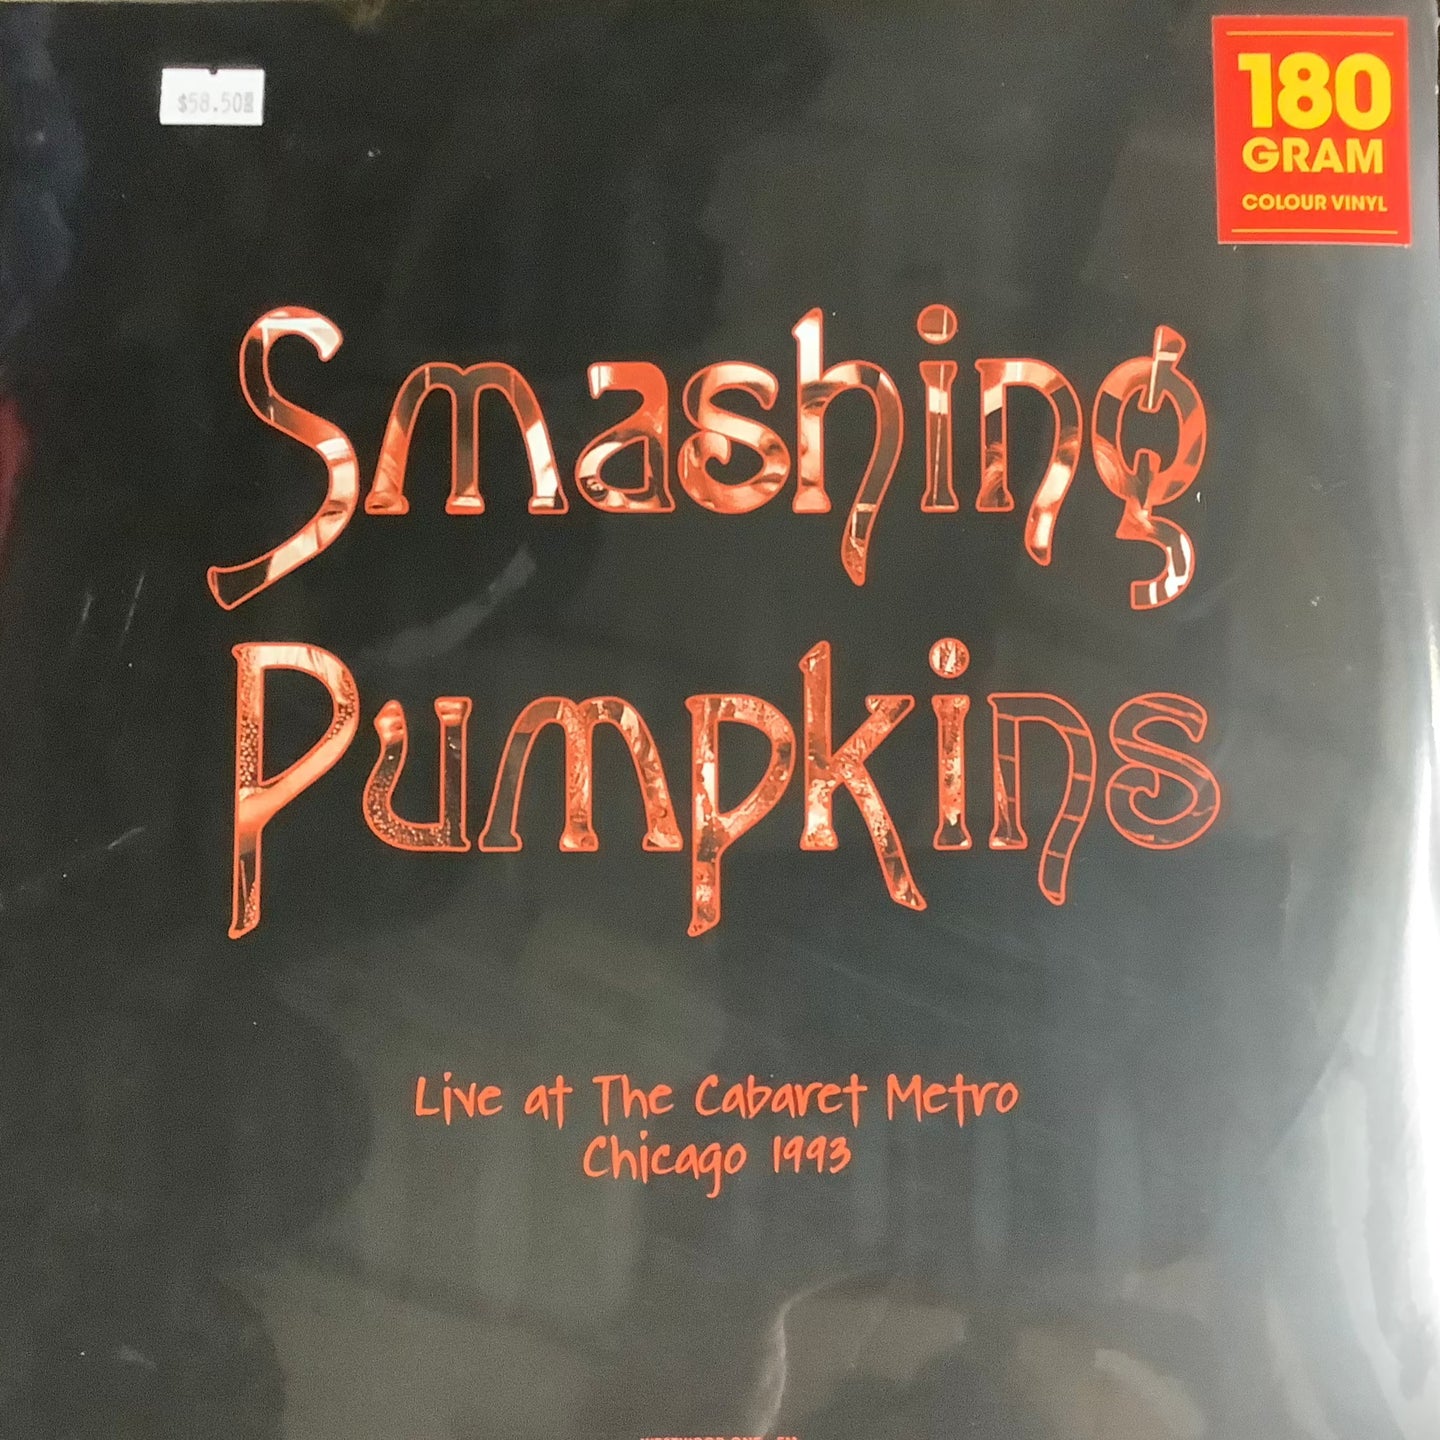 The Smashing Pumpkins - Live at The Cabaret Metro Chicago 1993